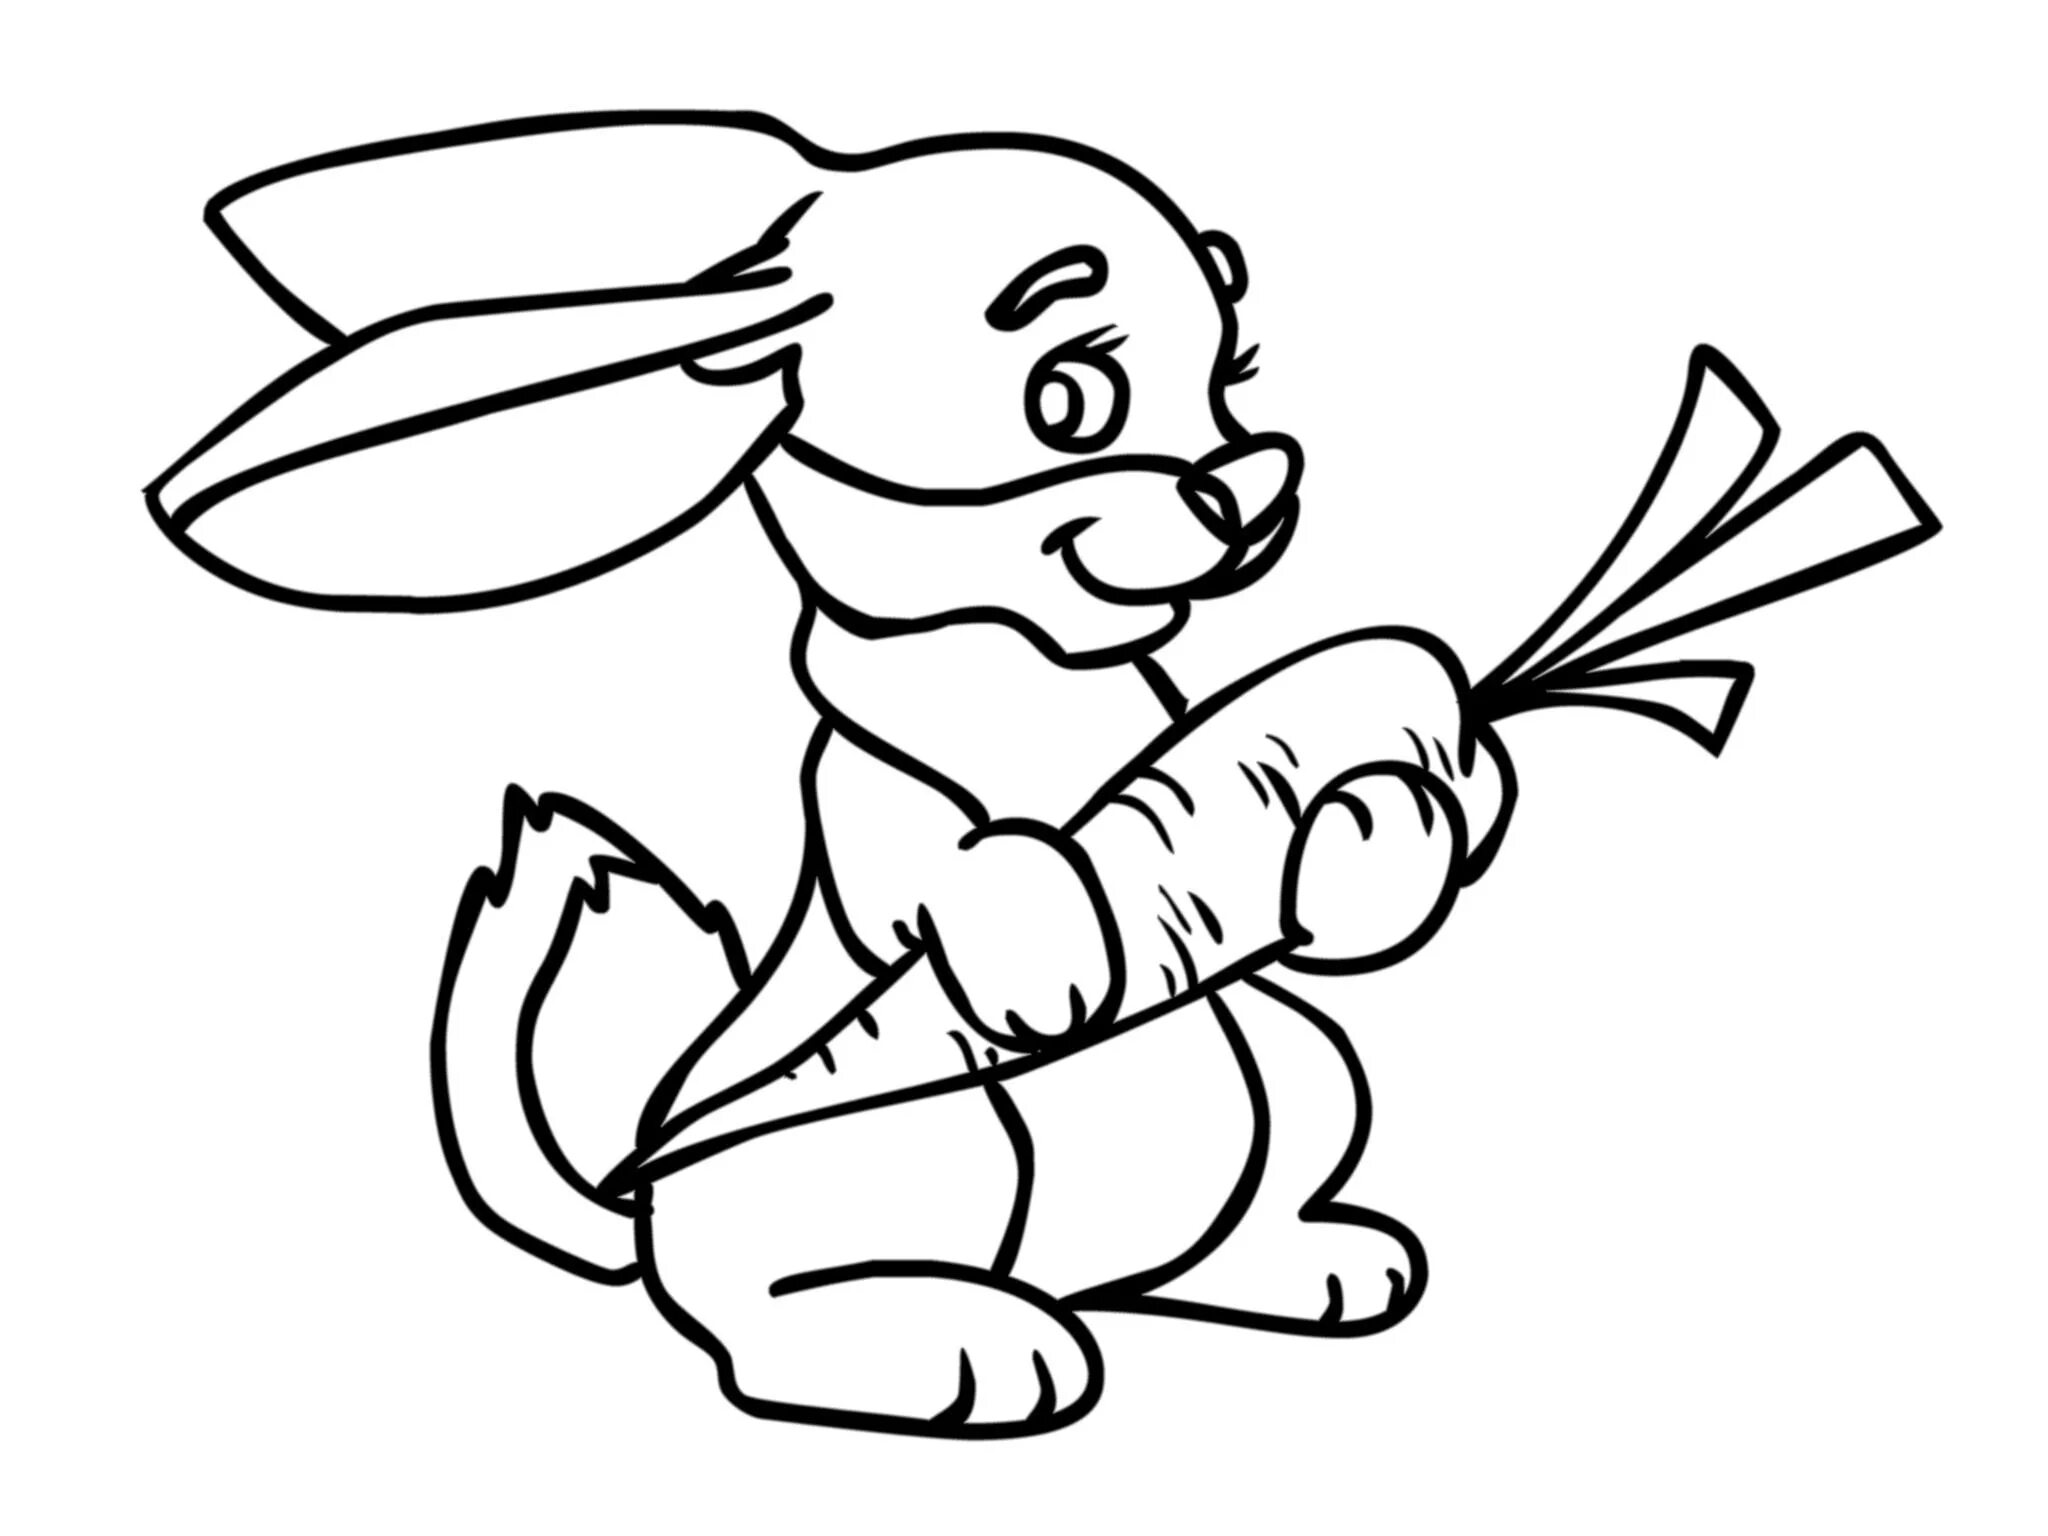 Carrot bunny for kids #1